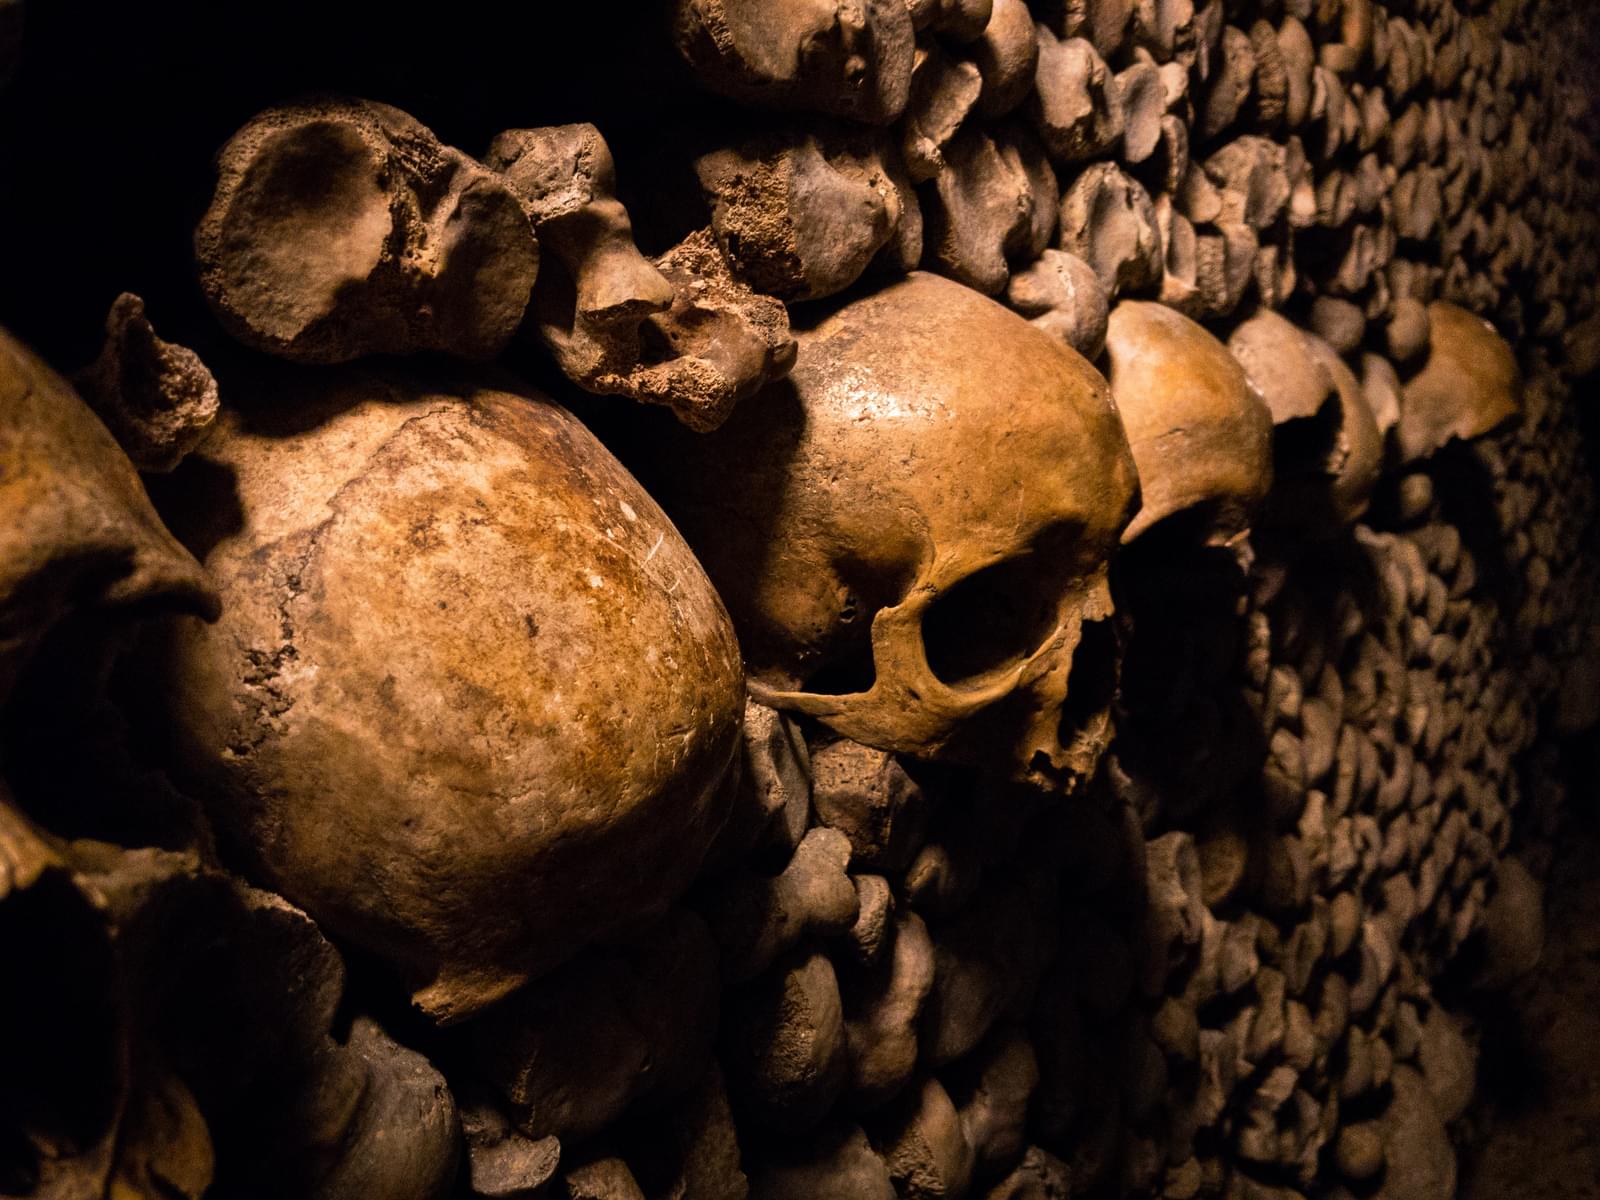 Visit the Catacombs of Paris